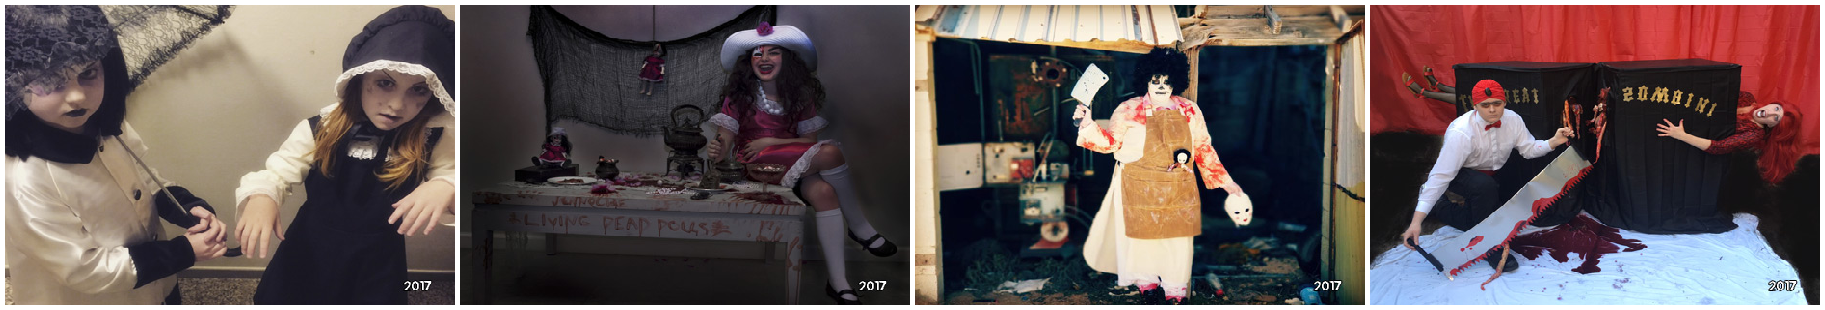 Living Dead Dolls Halloween Costume Contest 2018